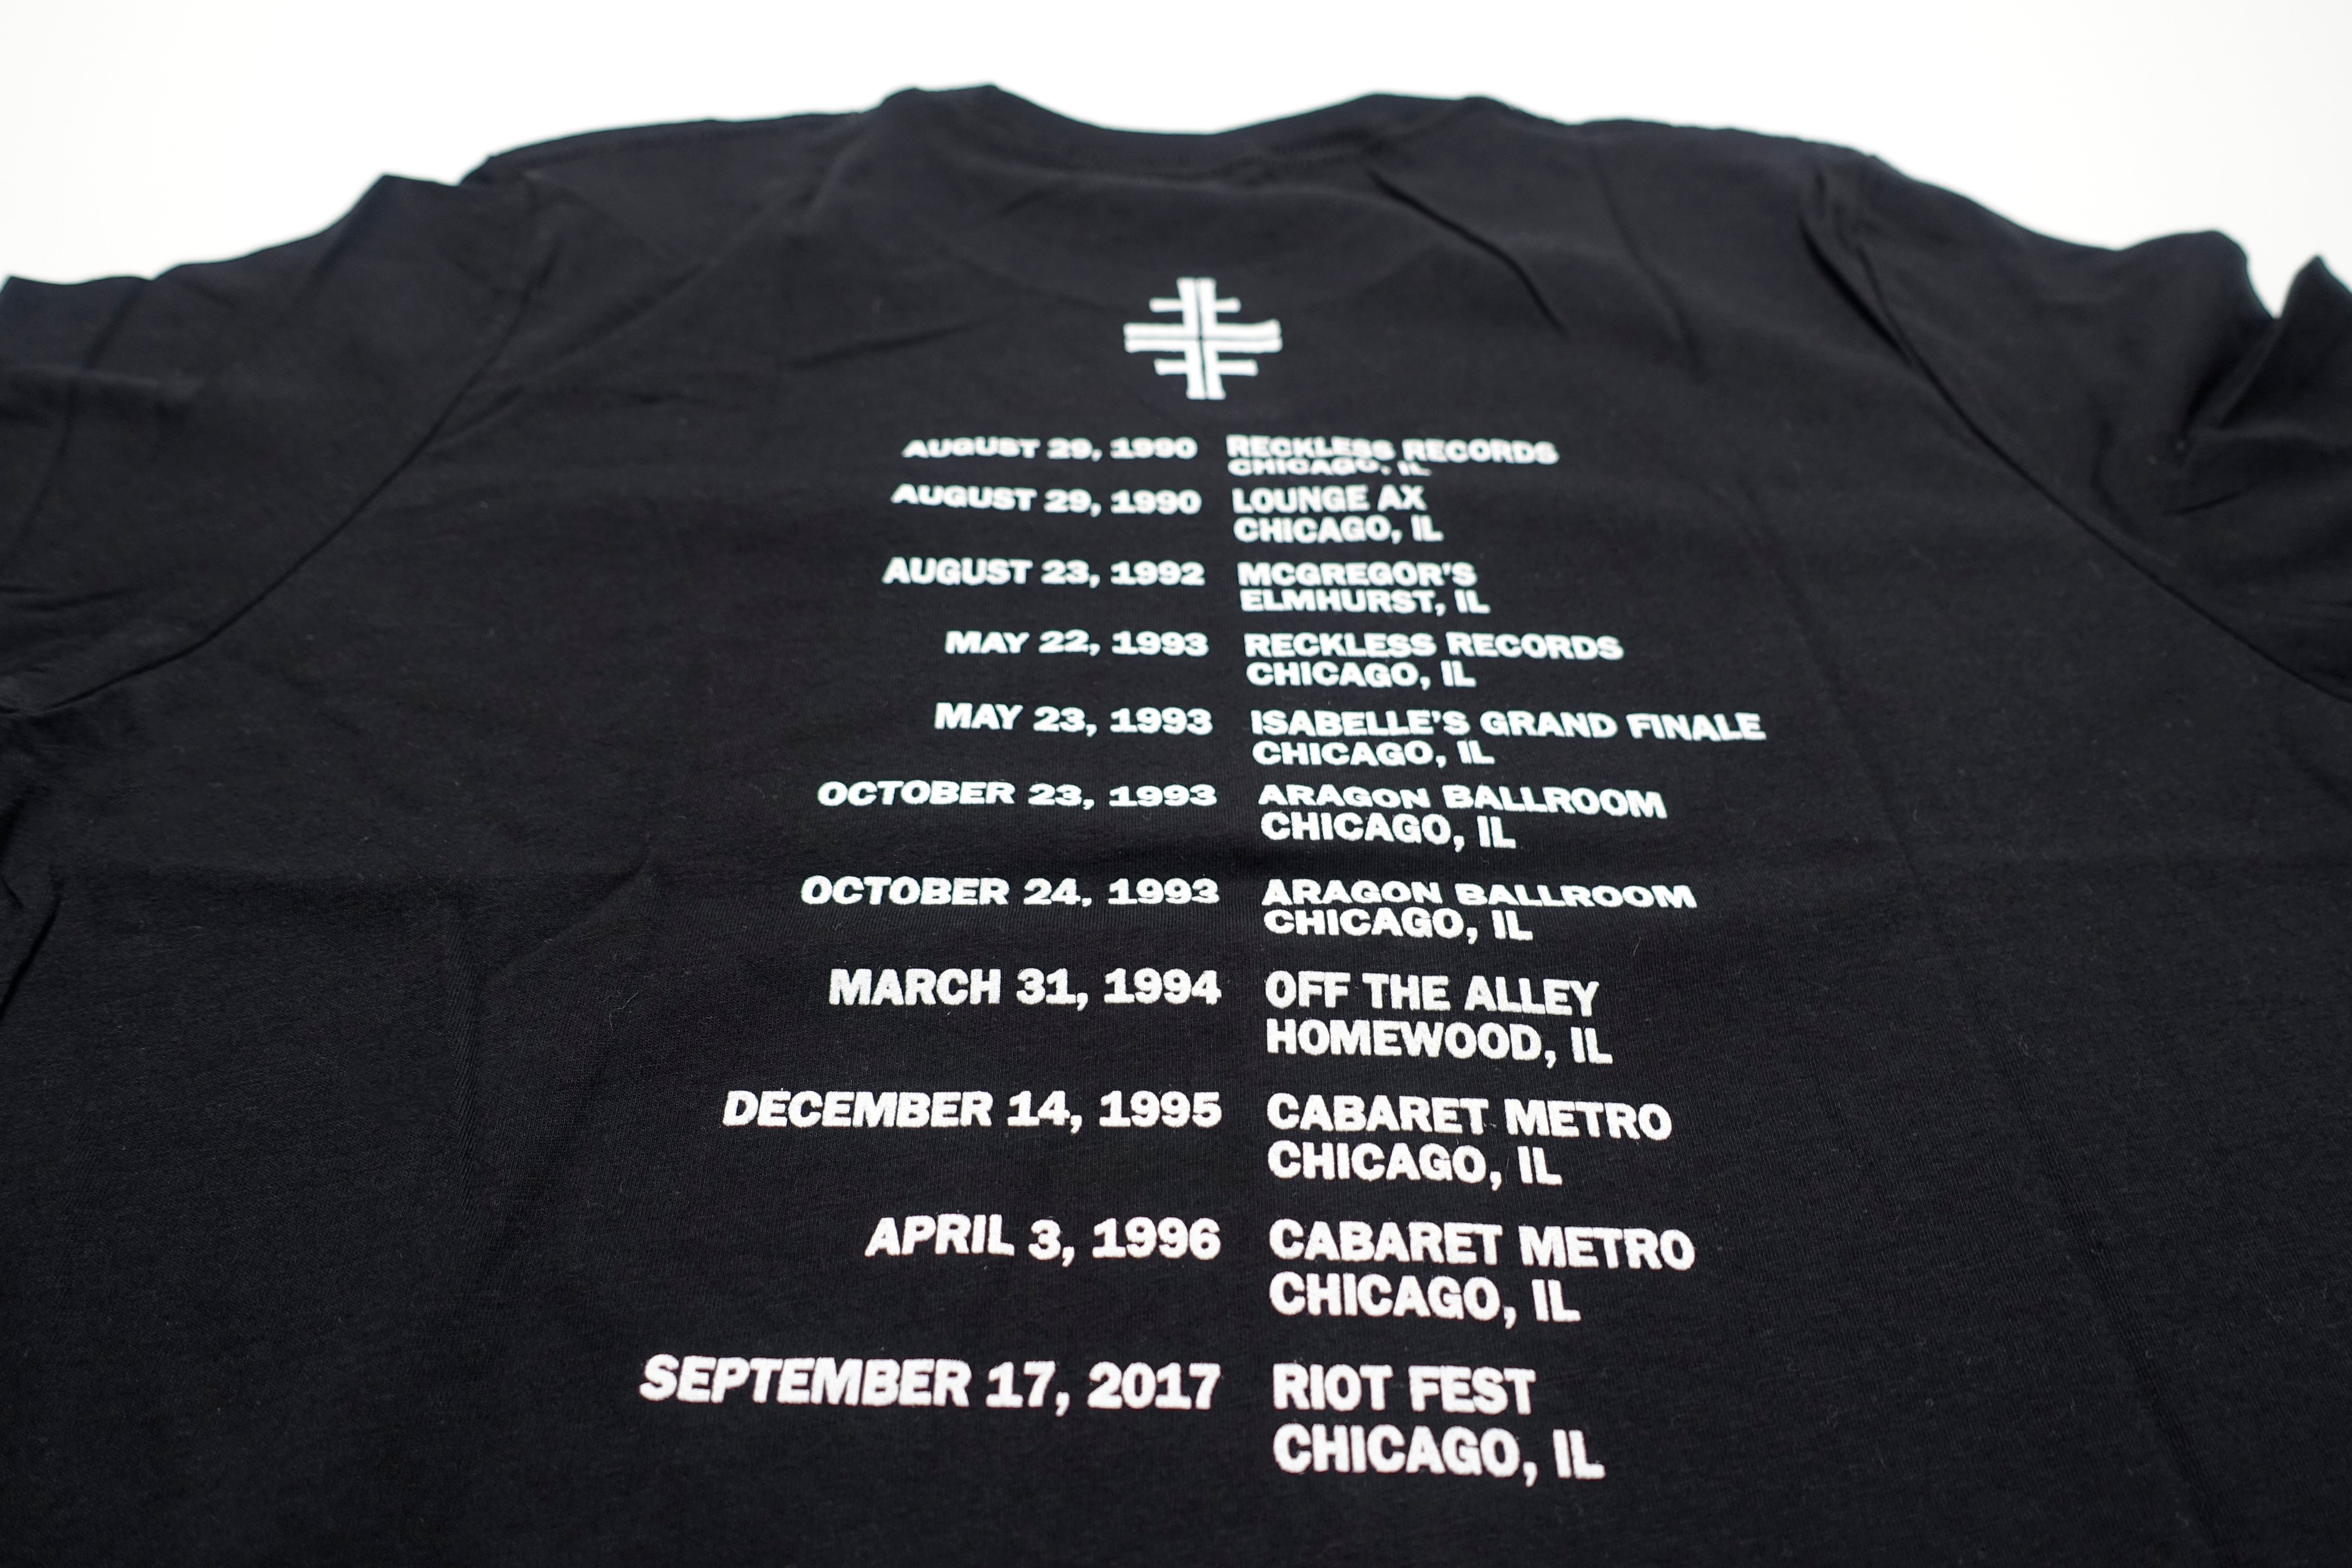 Jawbreaker - 9/17/2017 Chicago Riot Fest Shirt Size Large